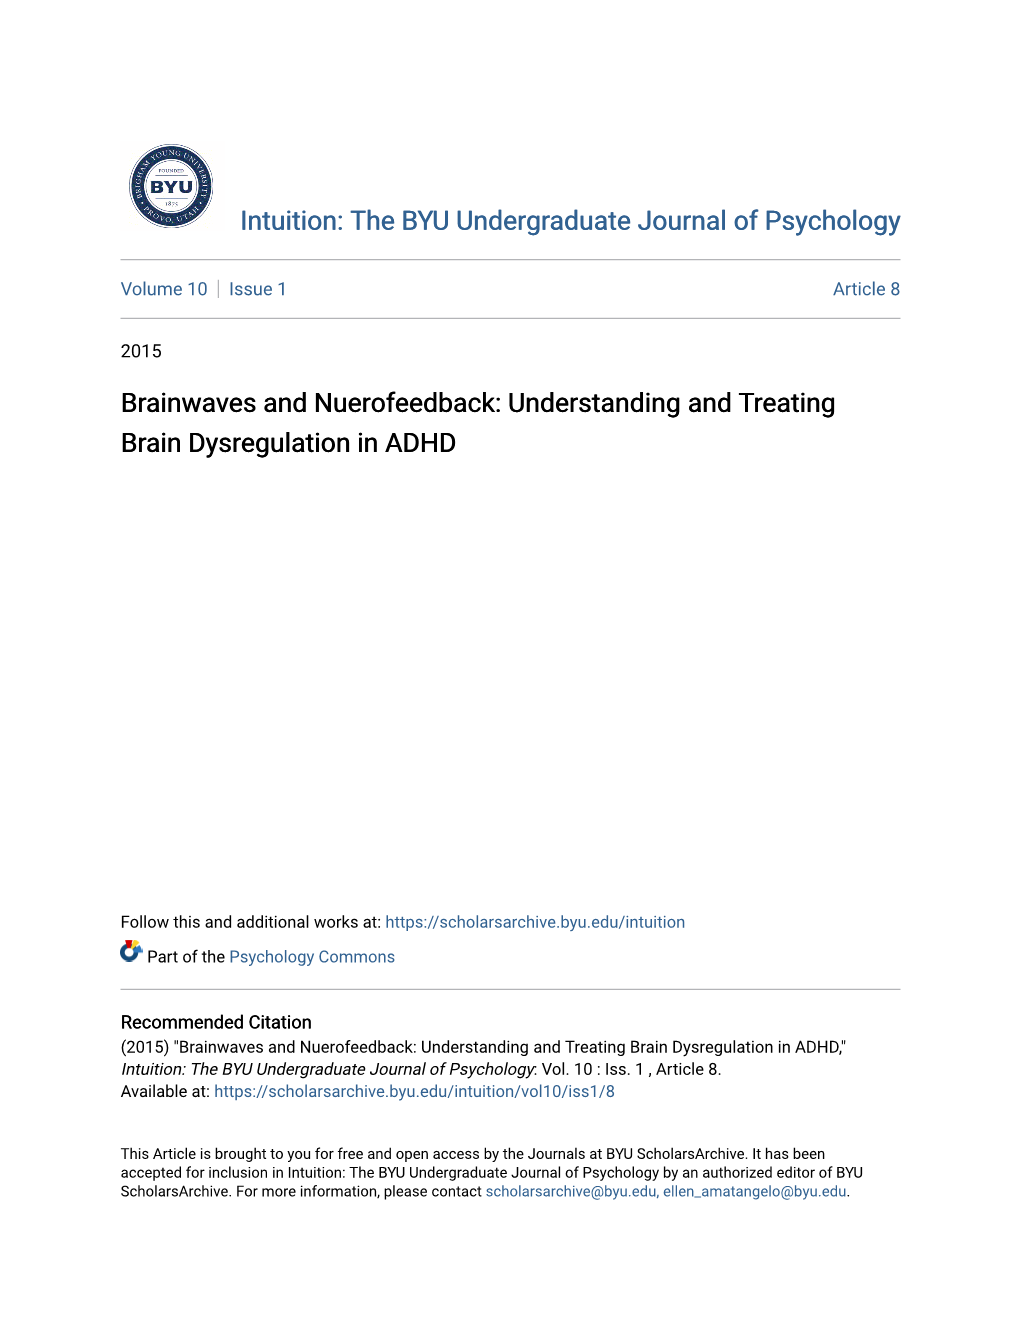 Brainwaves and Nuerofeedback: Understanding and Treating Brain Dysregulation in ADHD